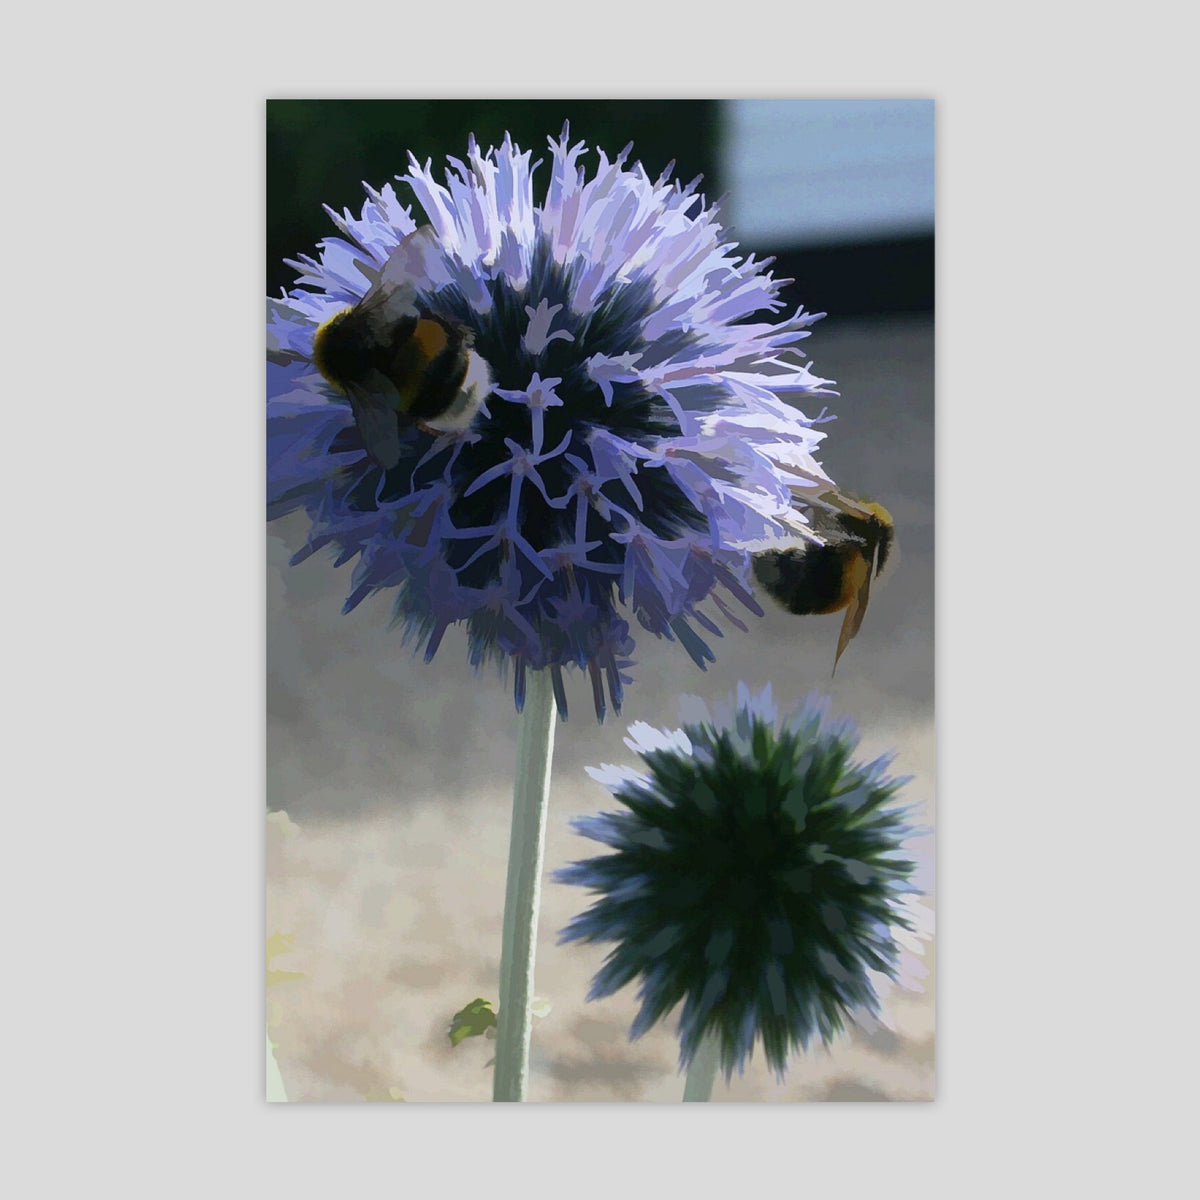 Bumblebee 2 (3314R-M4)